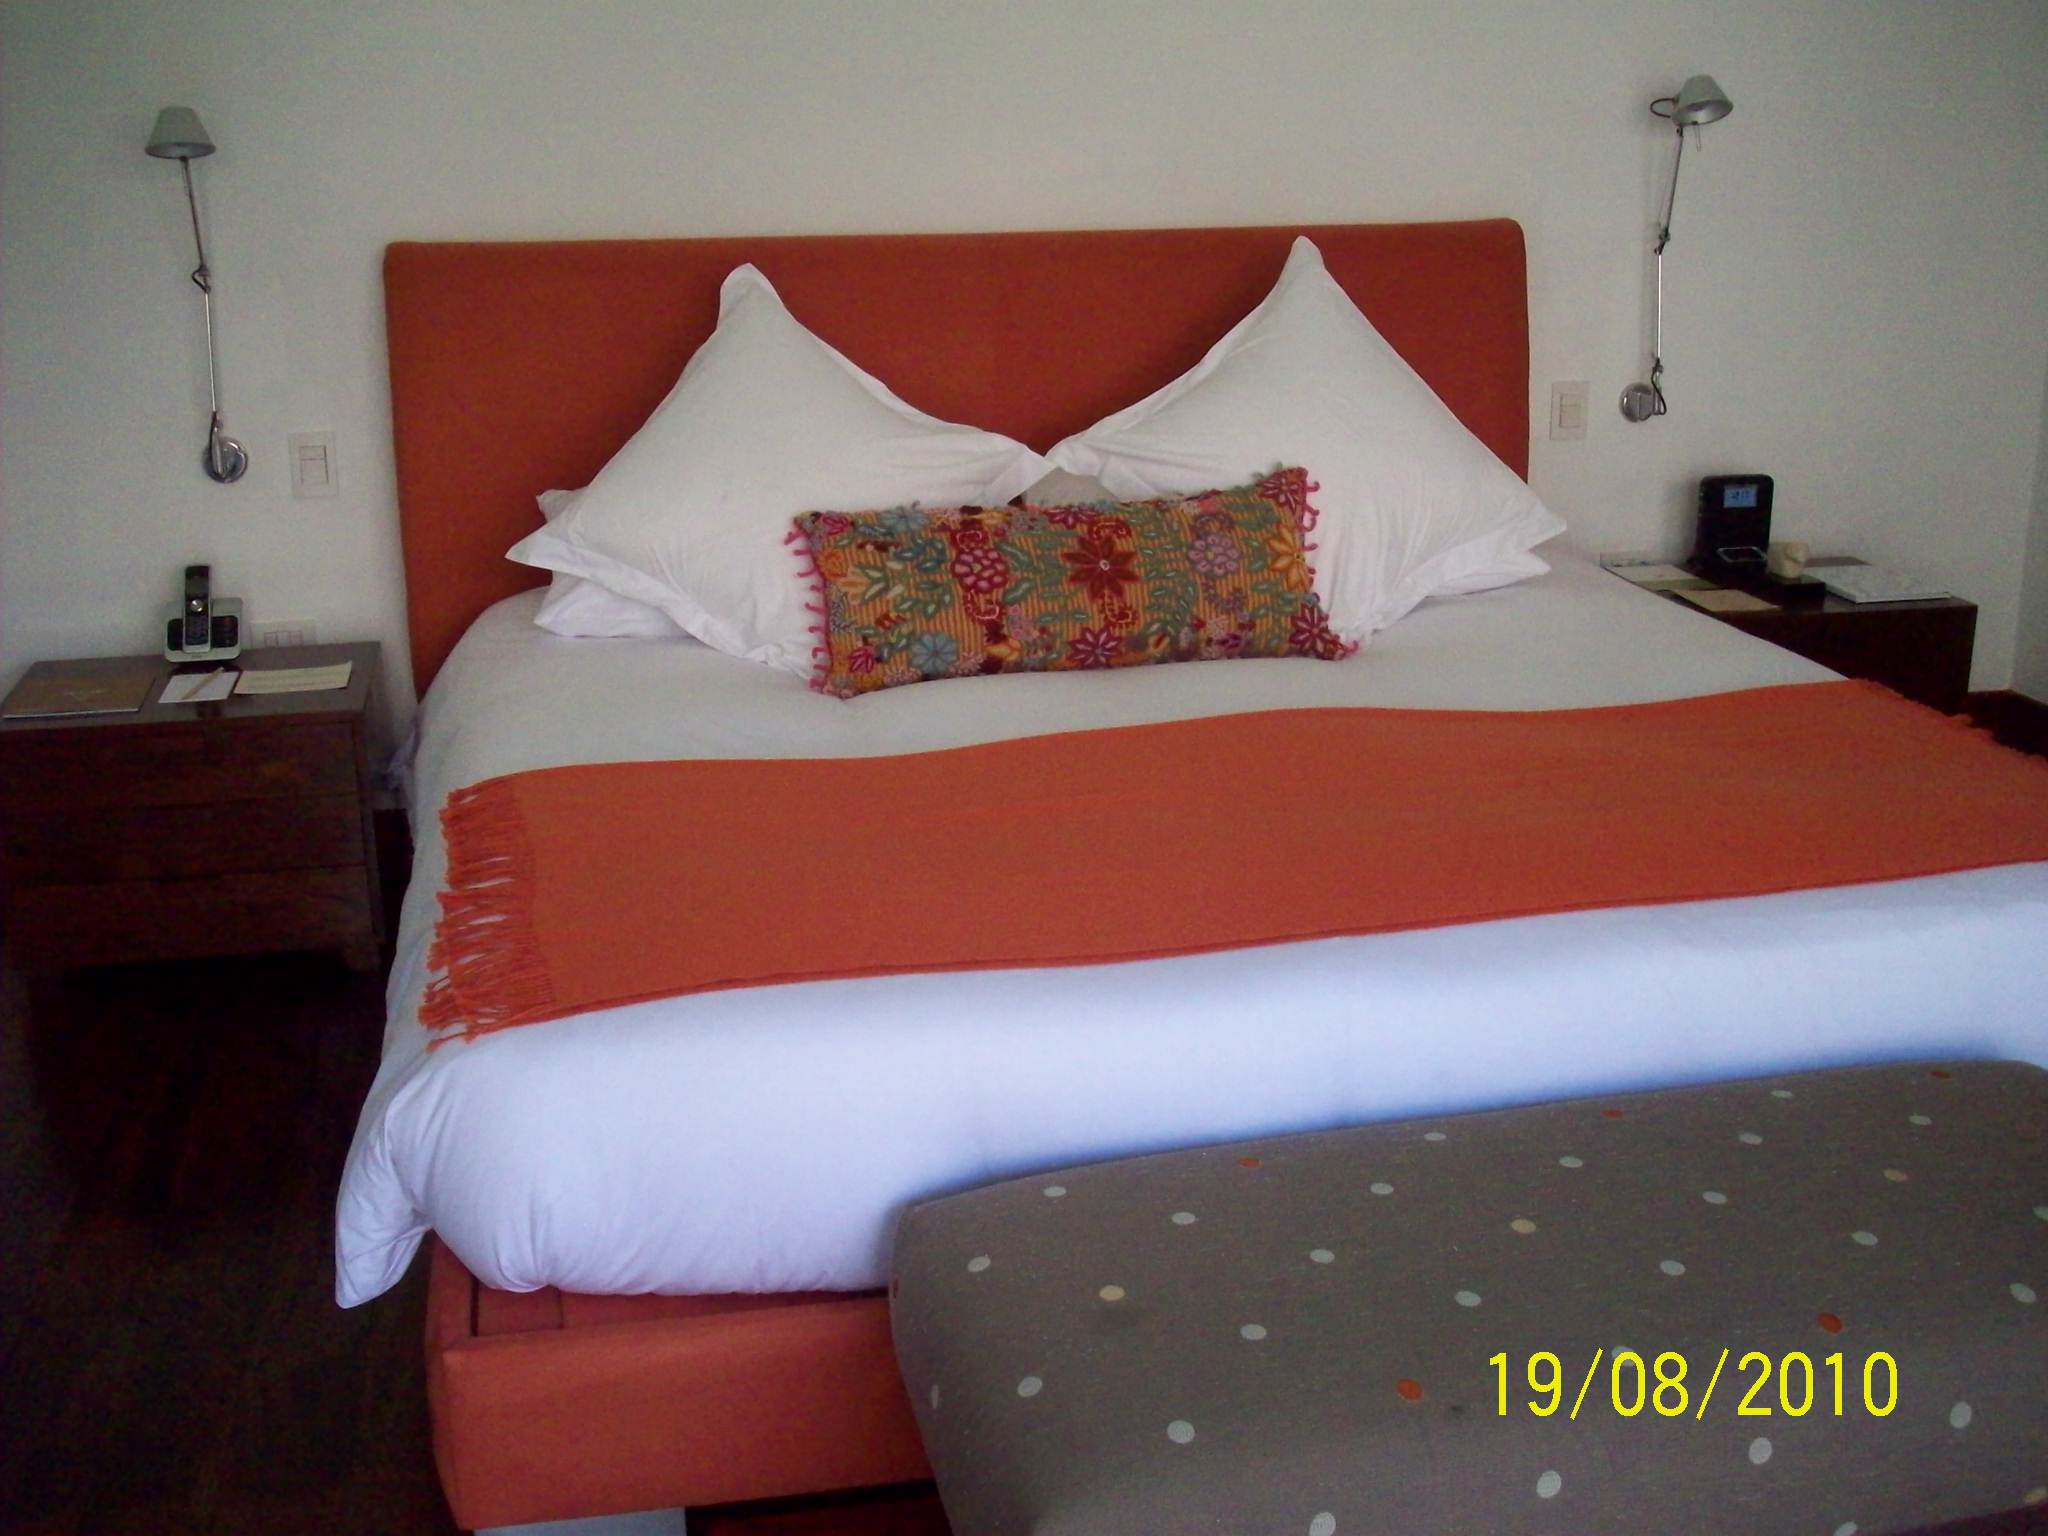 Peru Luxury Hotels: Aracari review of Hotel Rio Sagrado, Aracari Travel